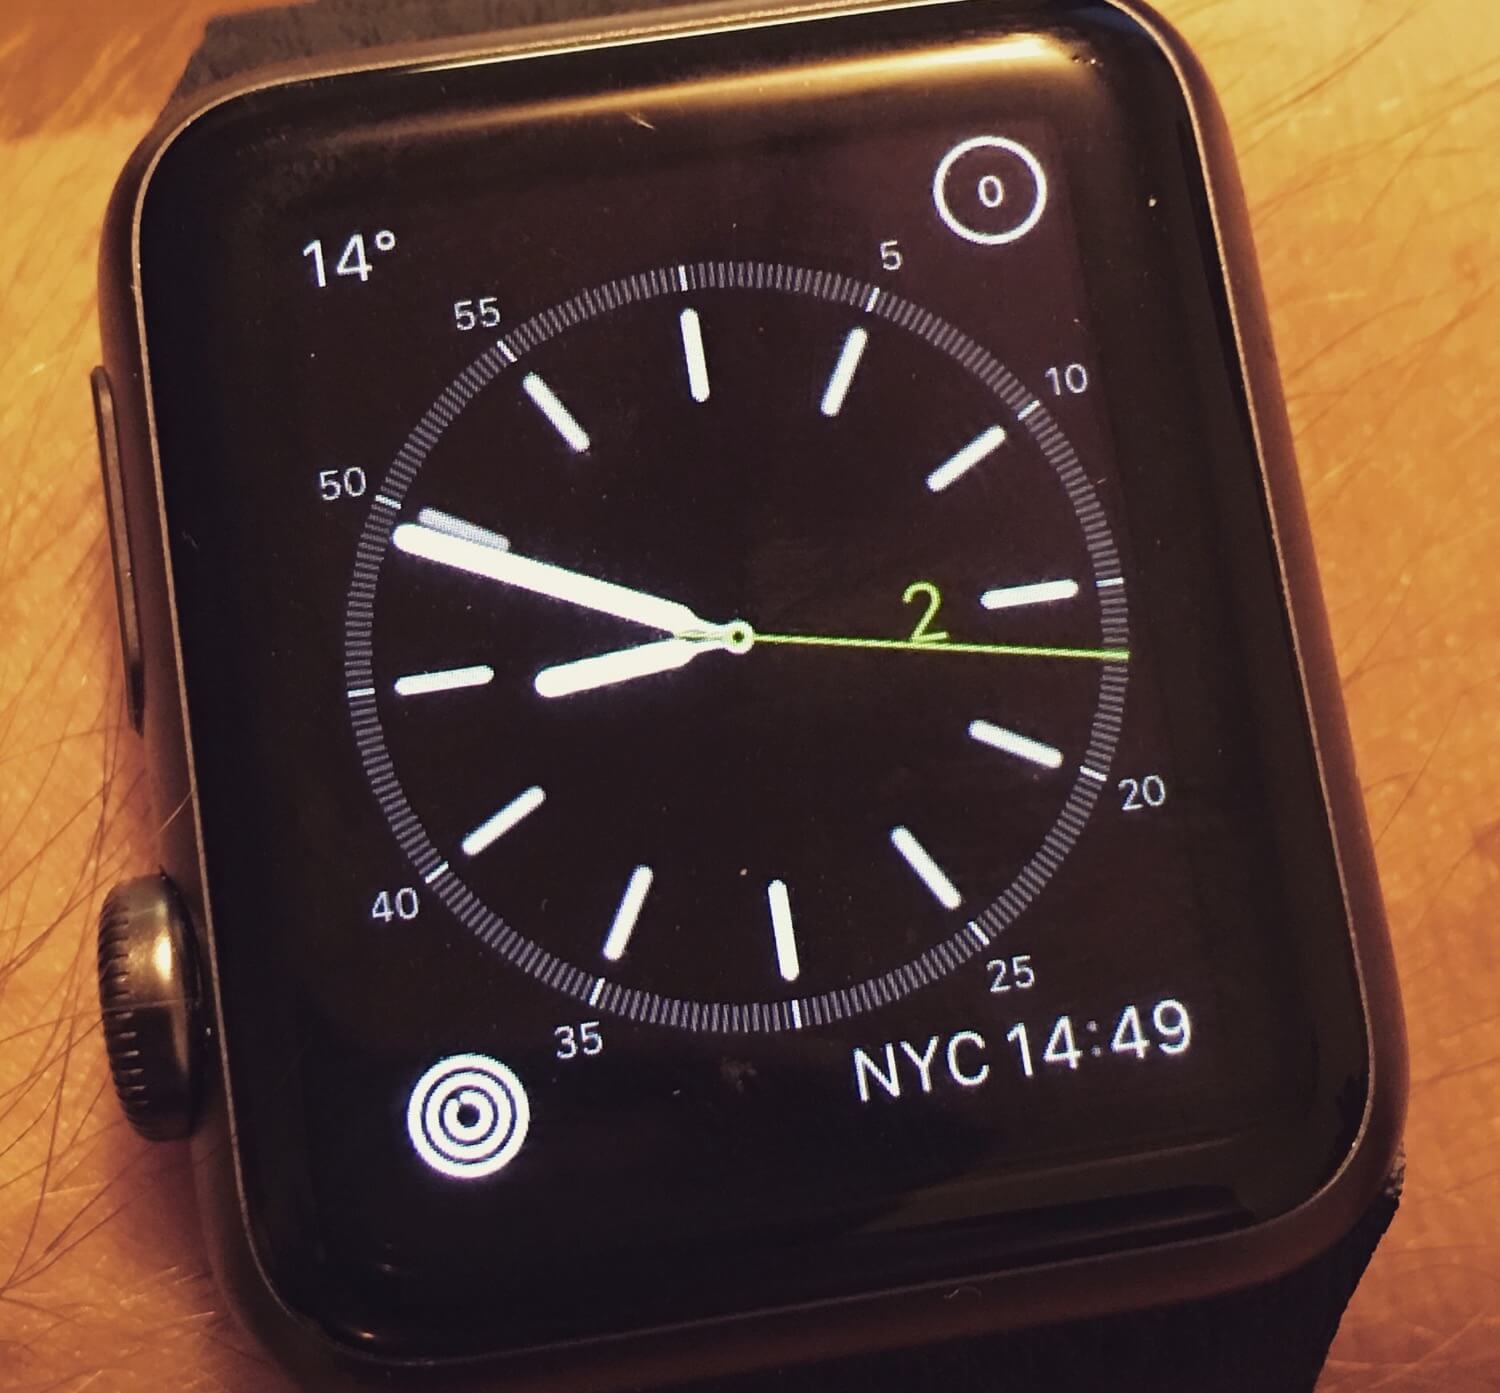 My Tech Gadget of 2015: The Apple Watch